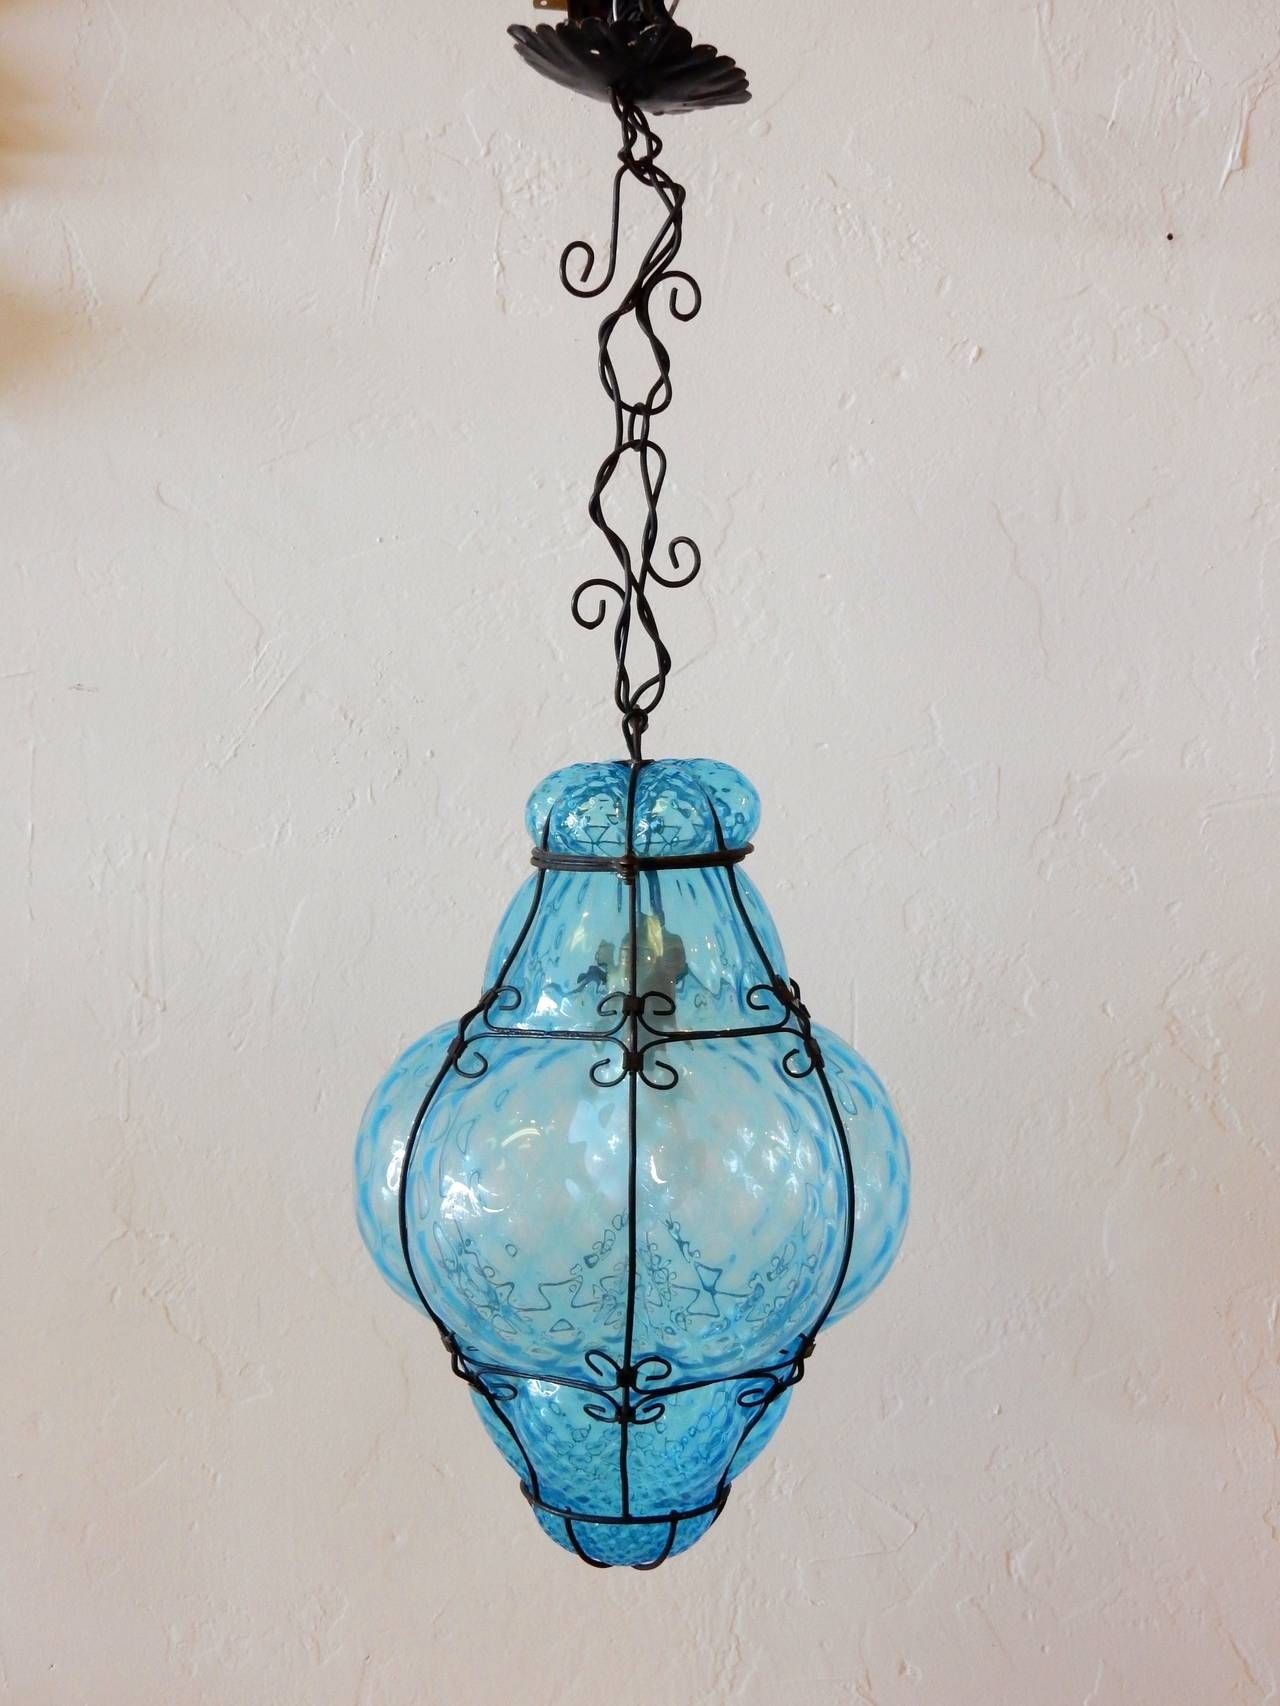 Italian Cage Art Glass Pendant Lampseugso In Aqua Blue At 1stdibs Inside Aqua Glass Pendant Lights (View 11 of 15)